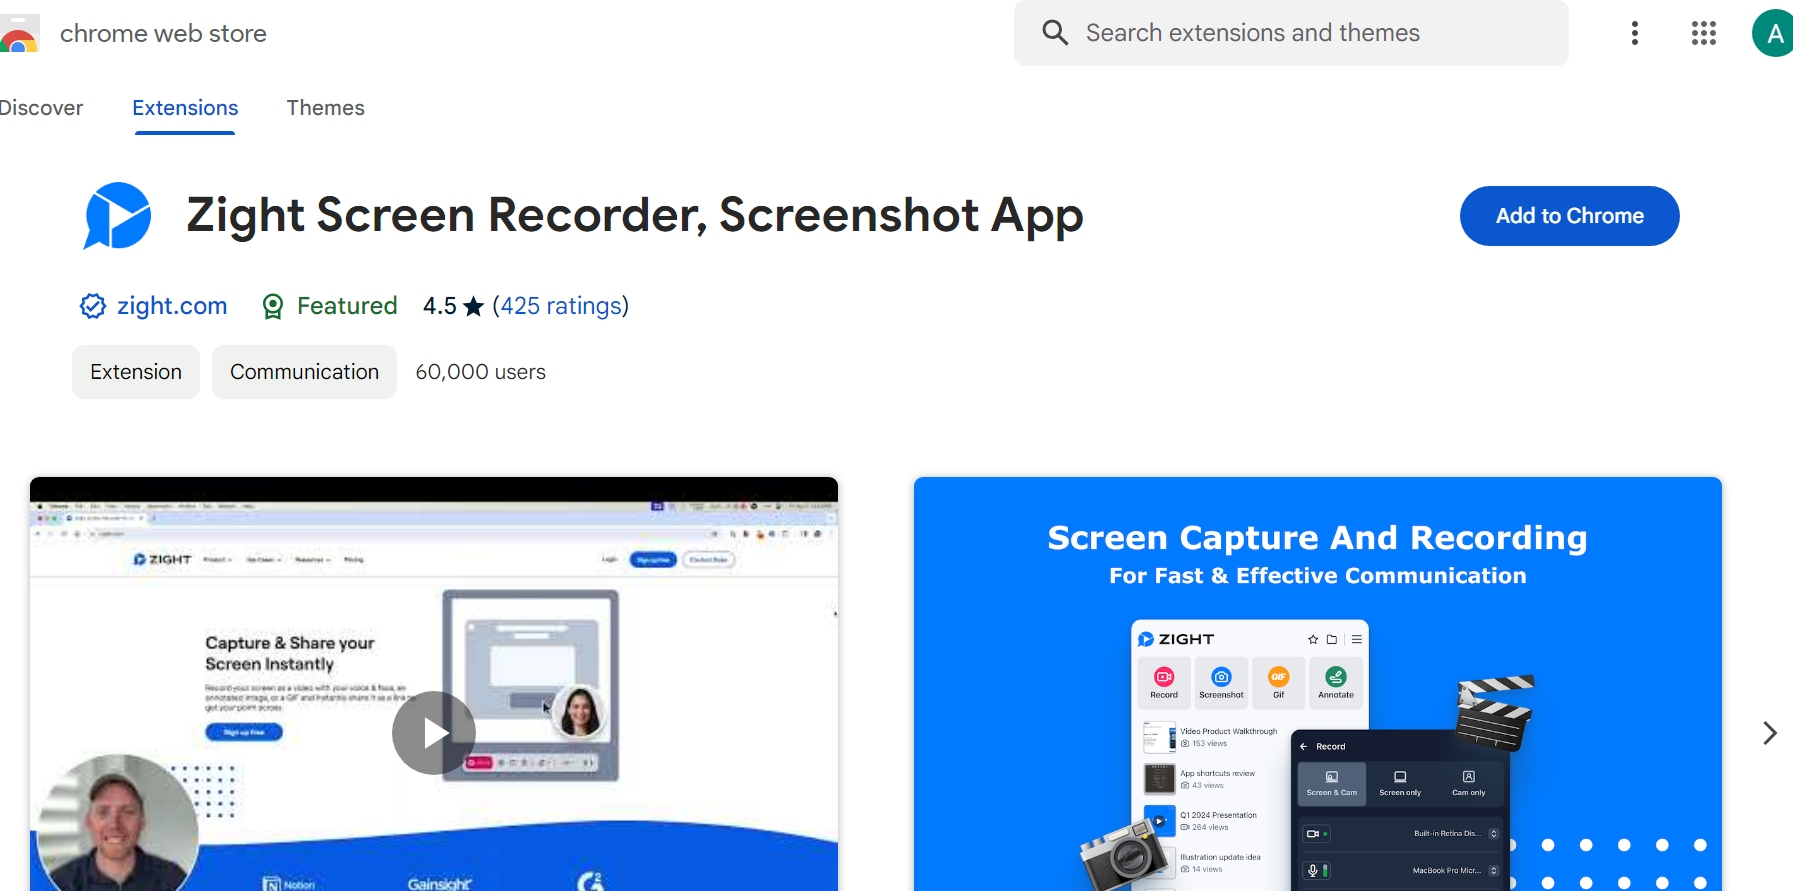 Zight Screenshot tool on the Chrome Web Store